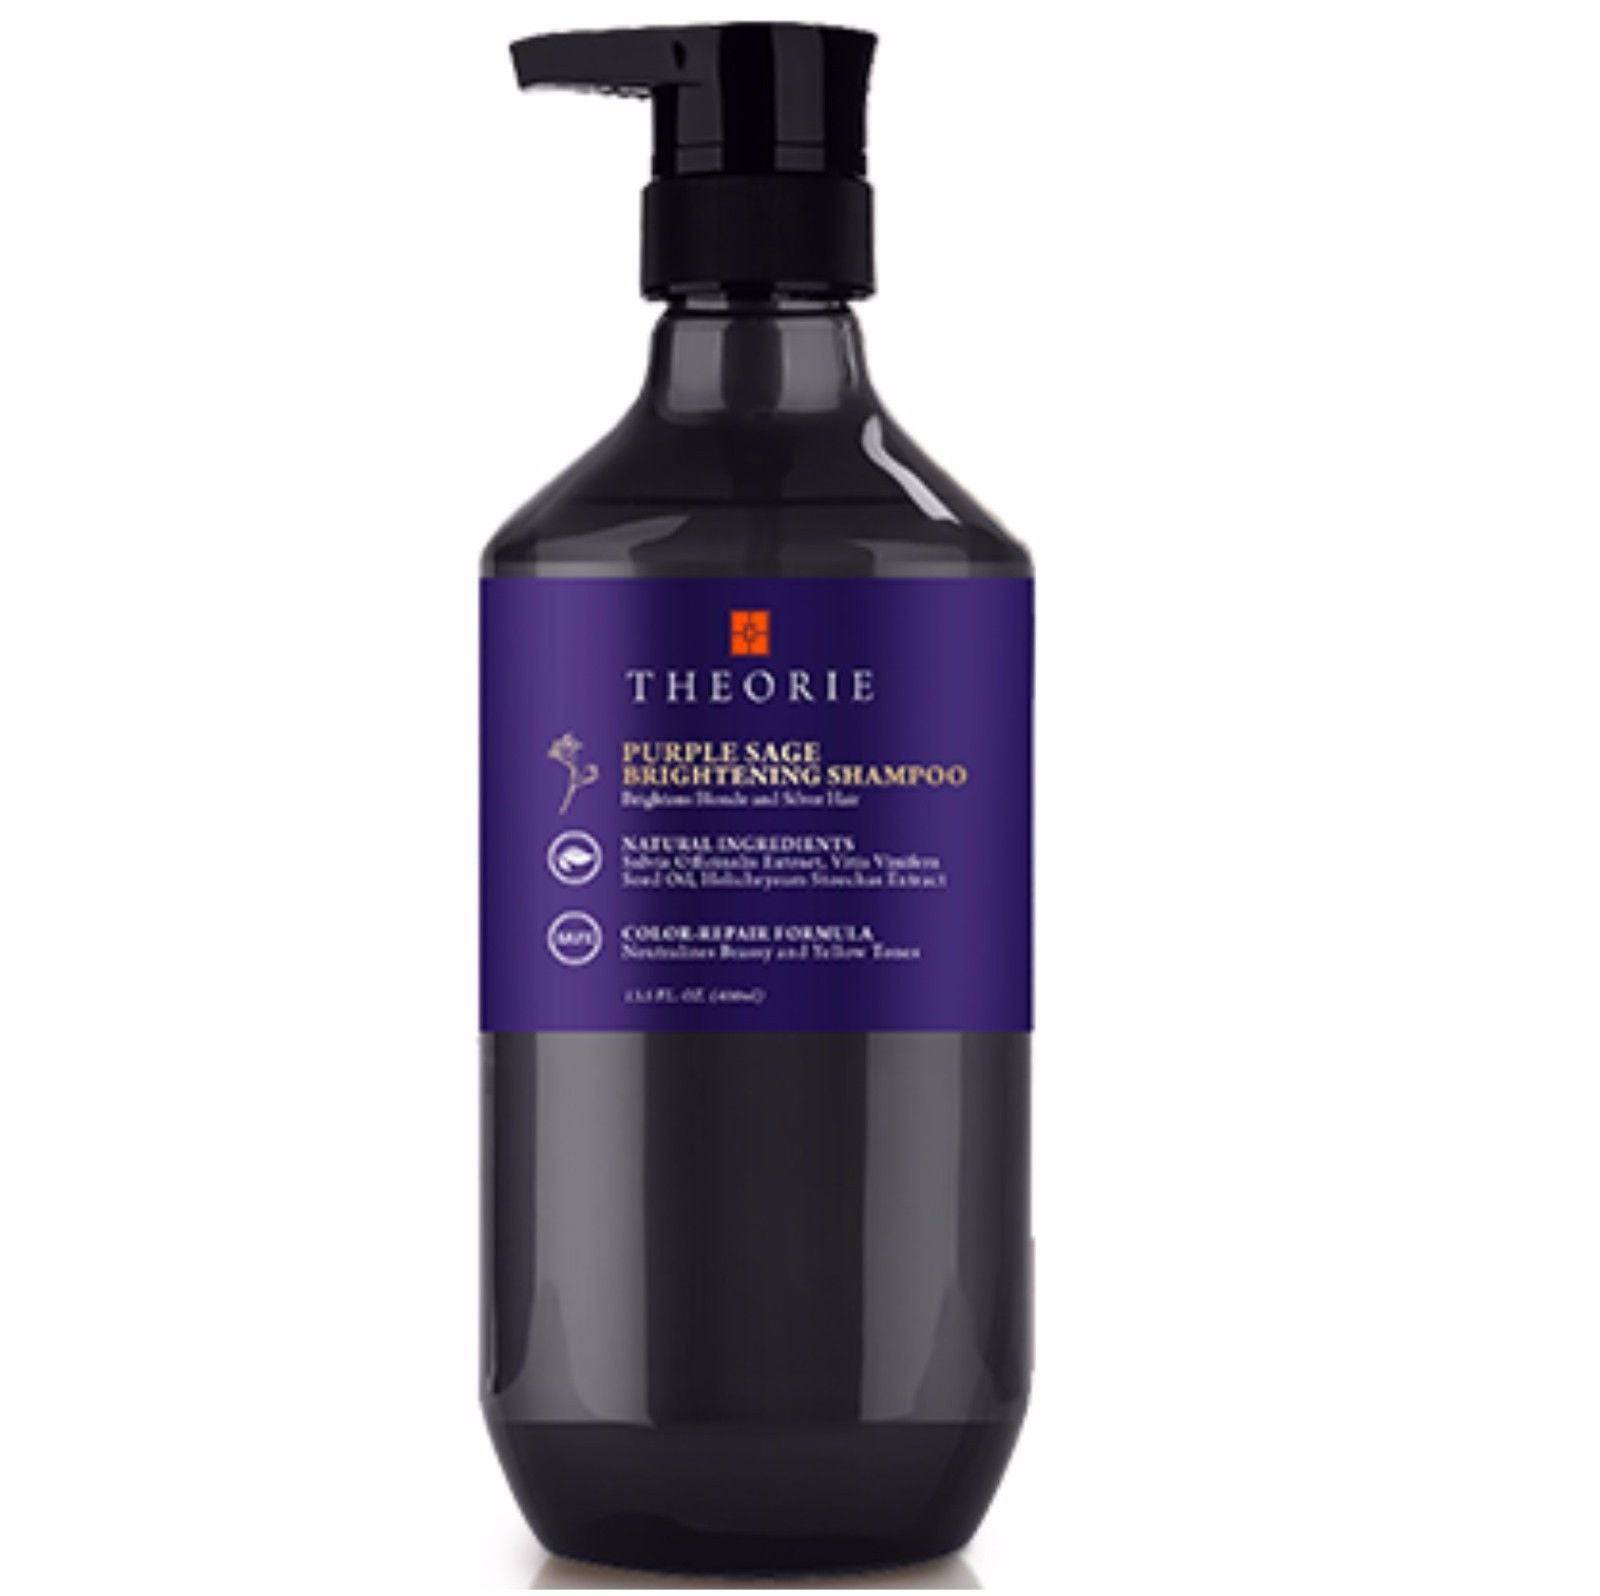 Theorie Purple Sage Brightening Shampoo 400 ml - On Line Hair Depot